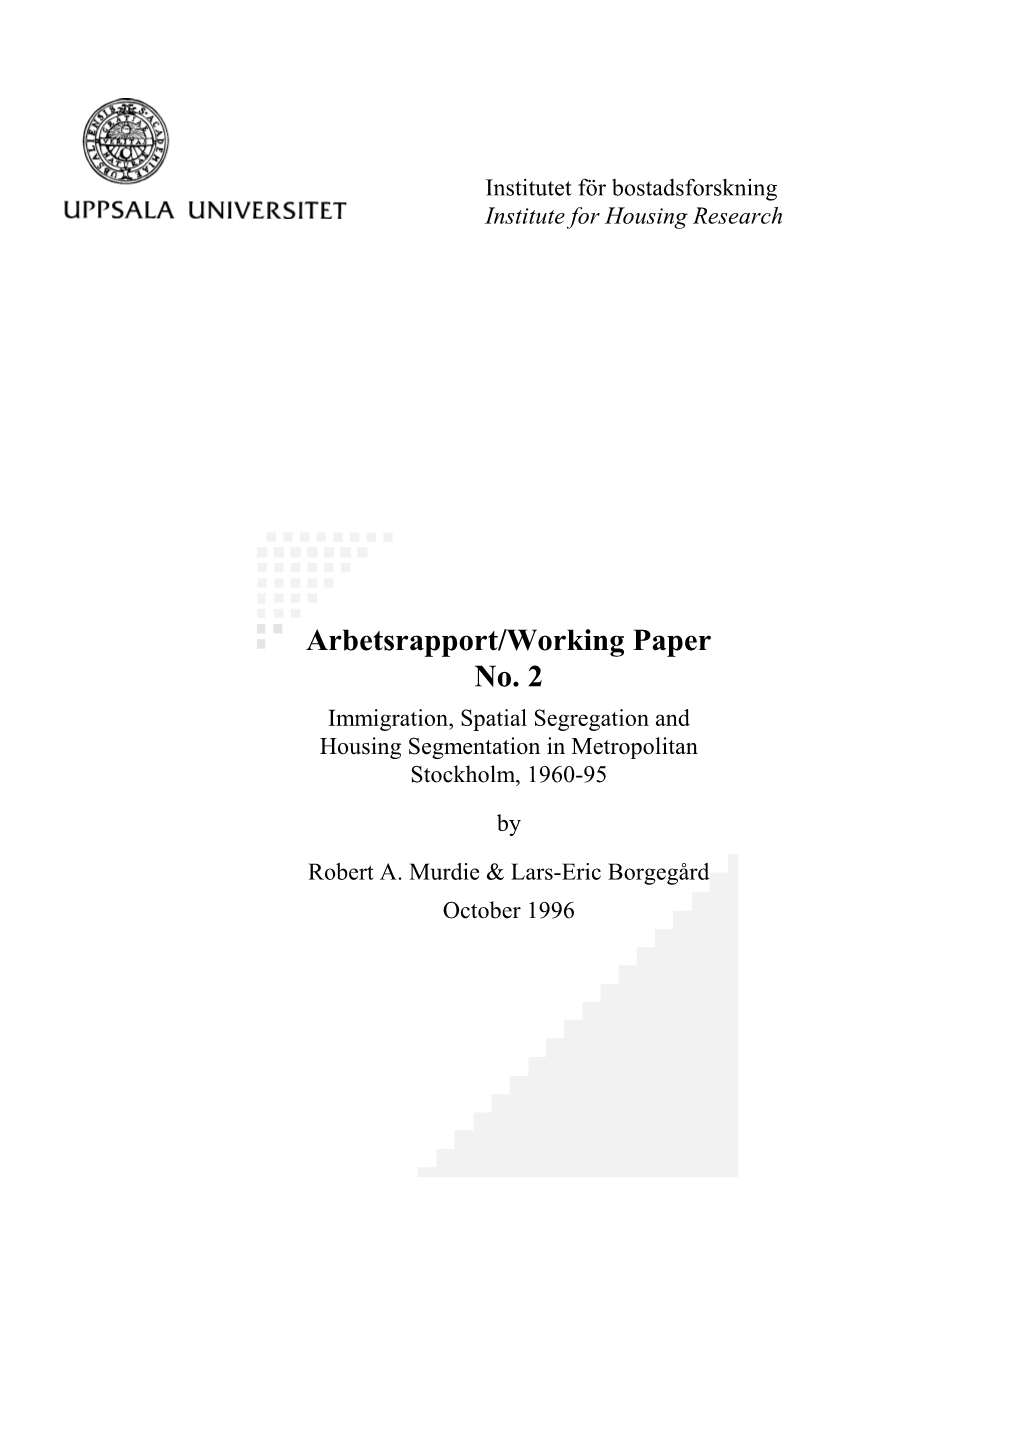 Arbetsrapport/Working Paper No. 2 Immigration, Spatial Segregation and Housing Segmentation in Metropolitan Stockholm, 1960-95